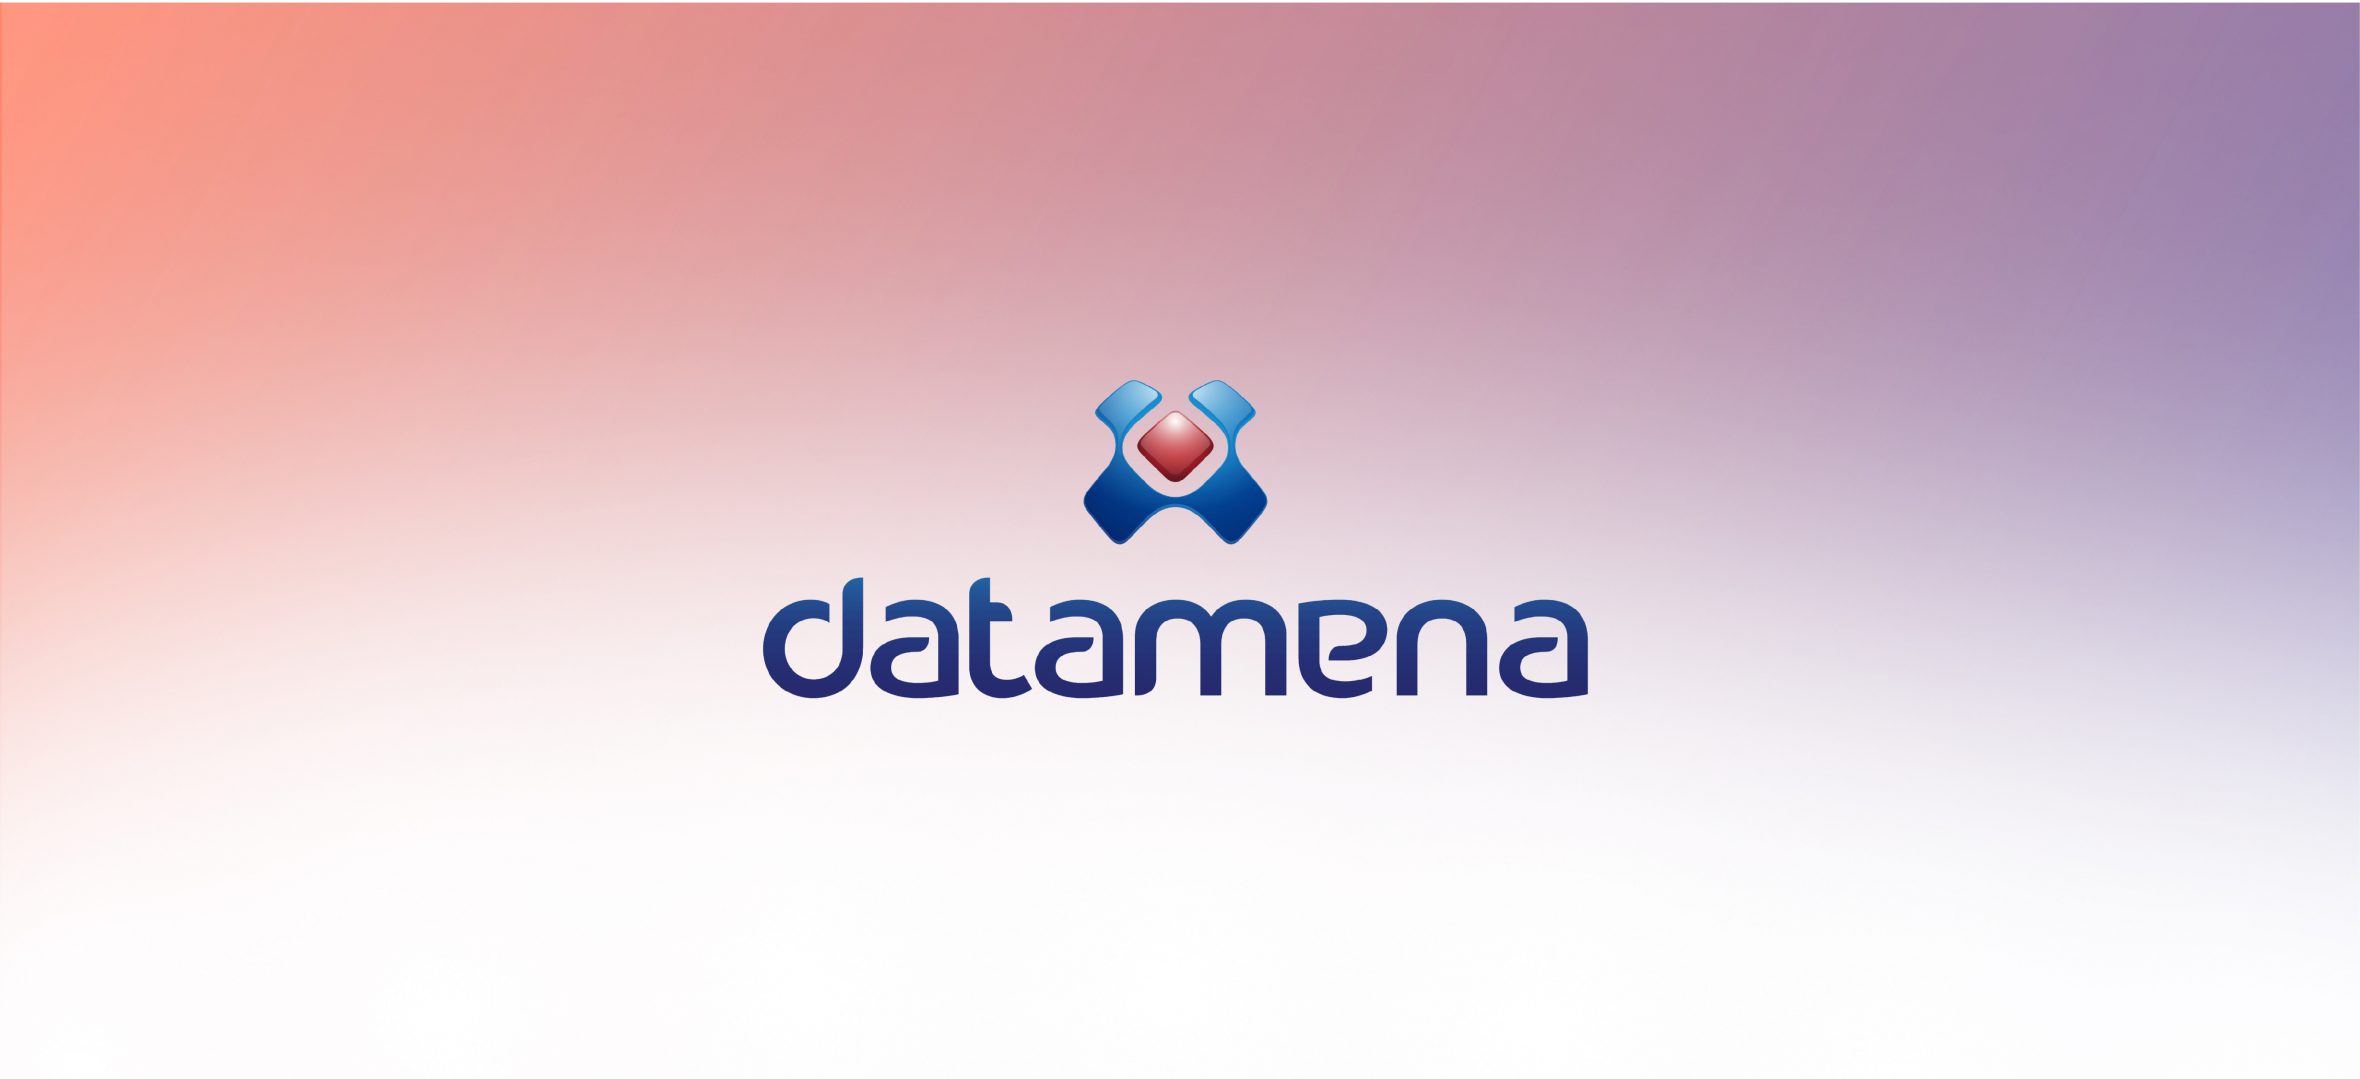 datamena Delivers On-Demand Cloud Access with Epsilon’s Infiny Platform